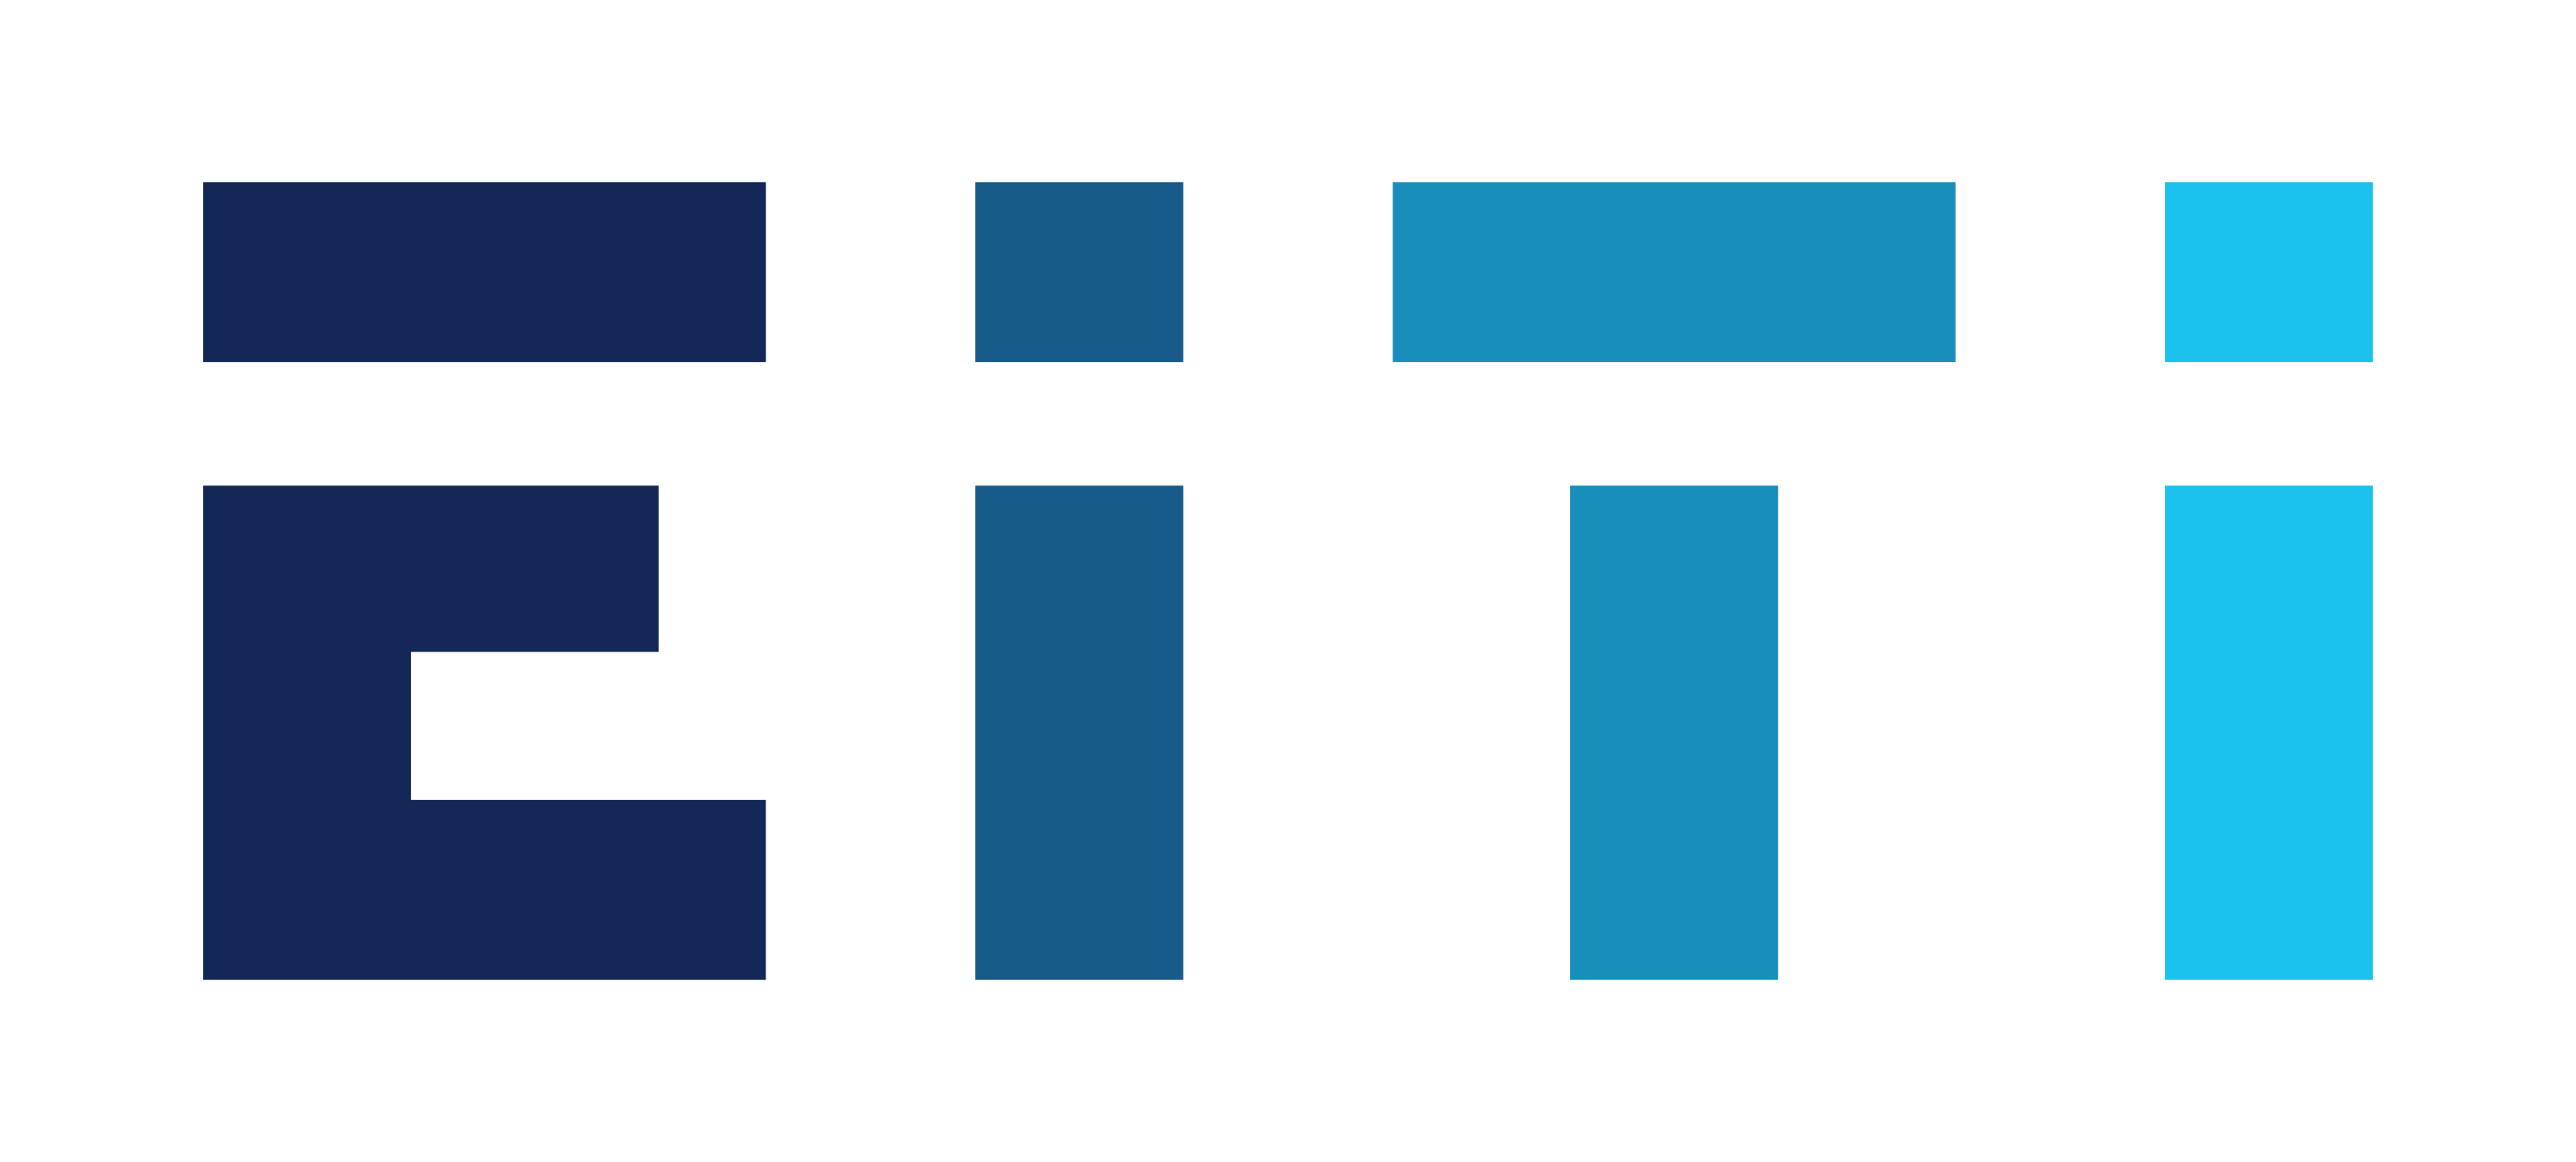 Logo EITI